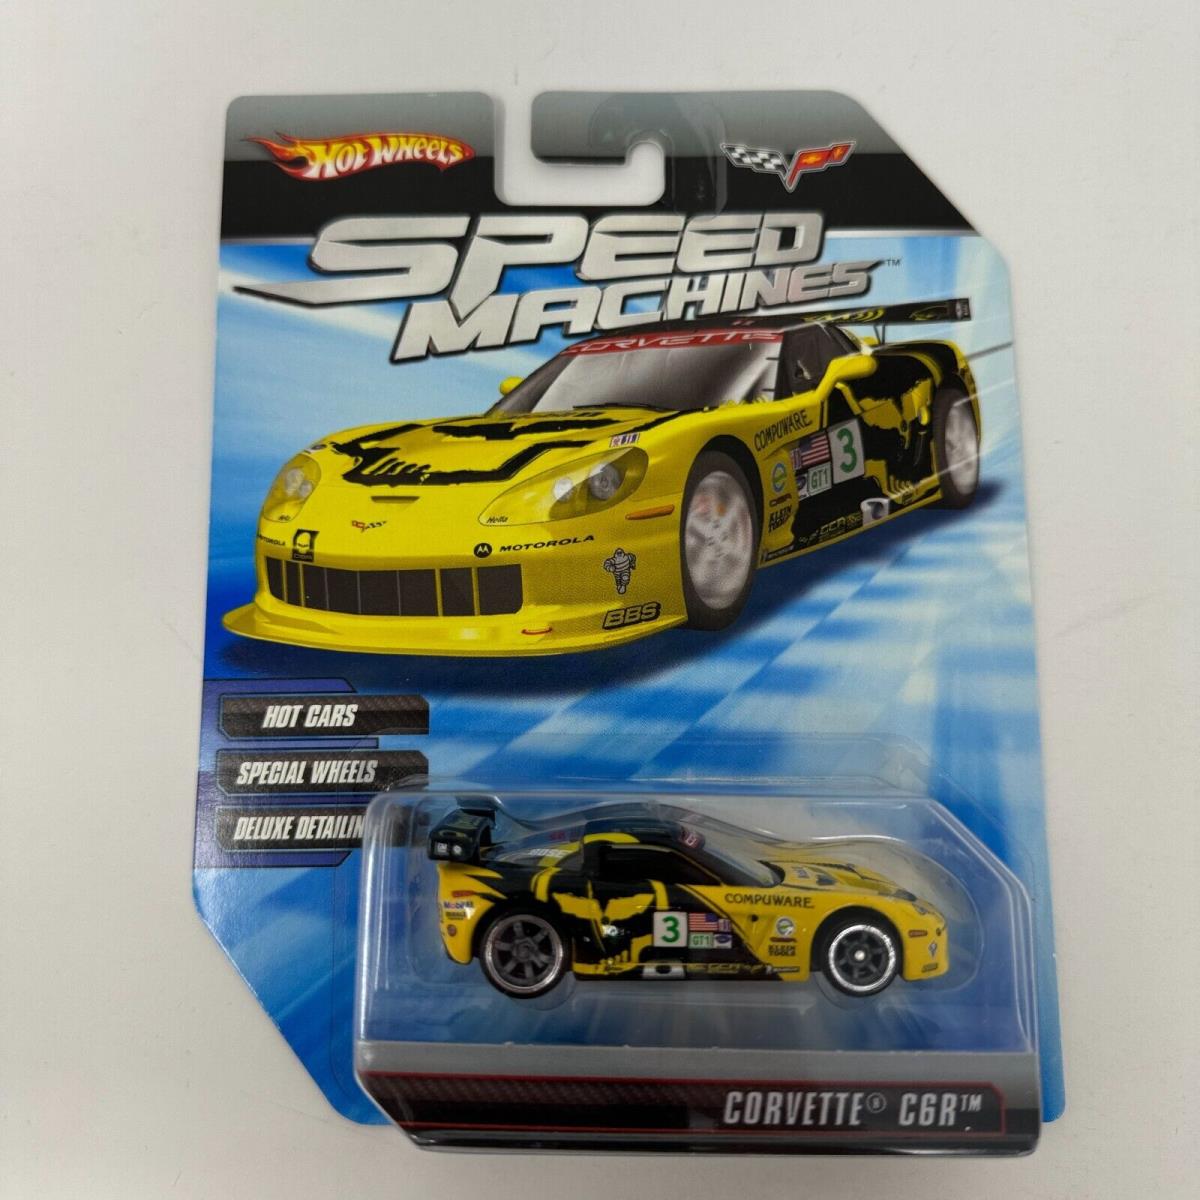 Hot Wheels Speed Machines Corvette C6R Racecar 1:64